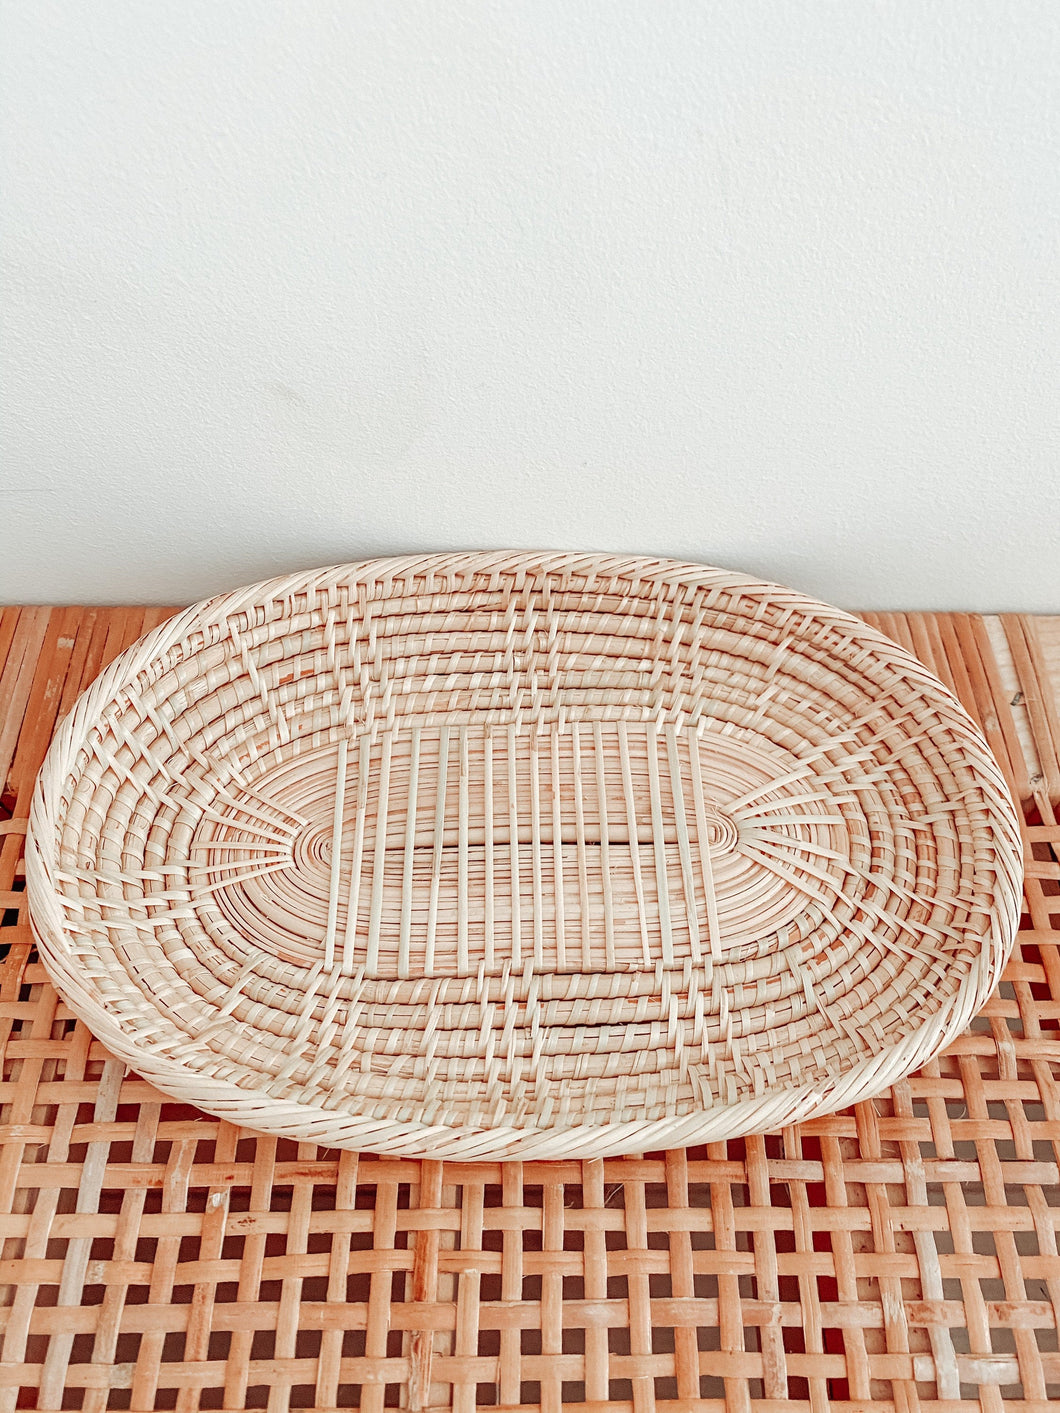 Oval Rattan Display Tray Platter | Boho Coastal Decor